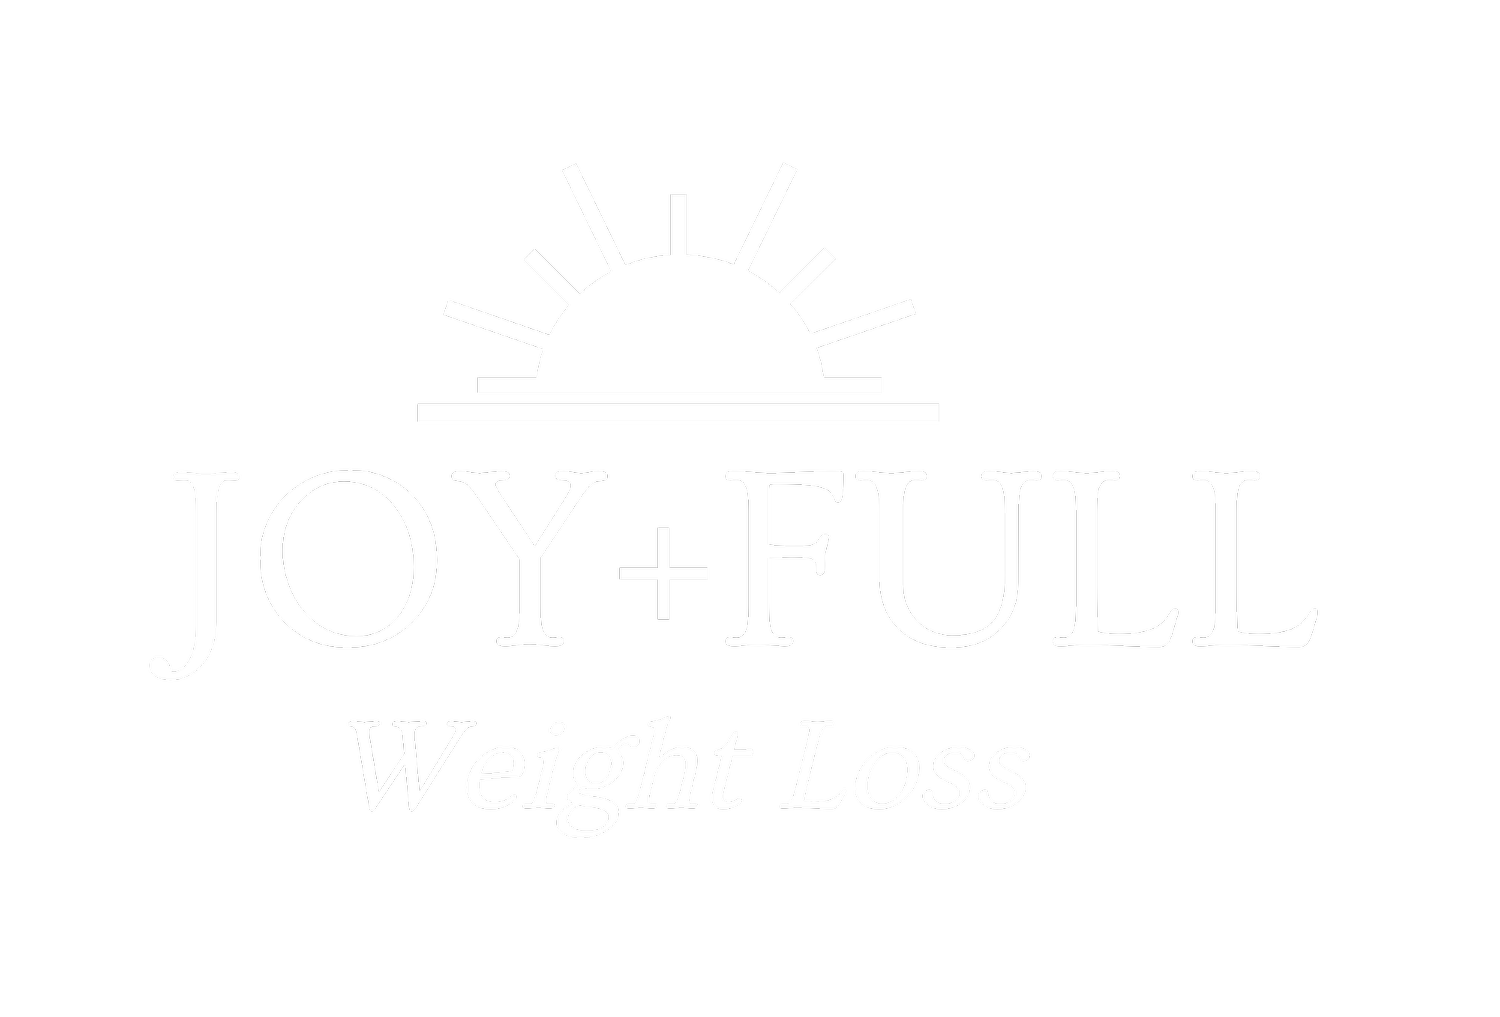 joy+full weight loss